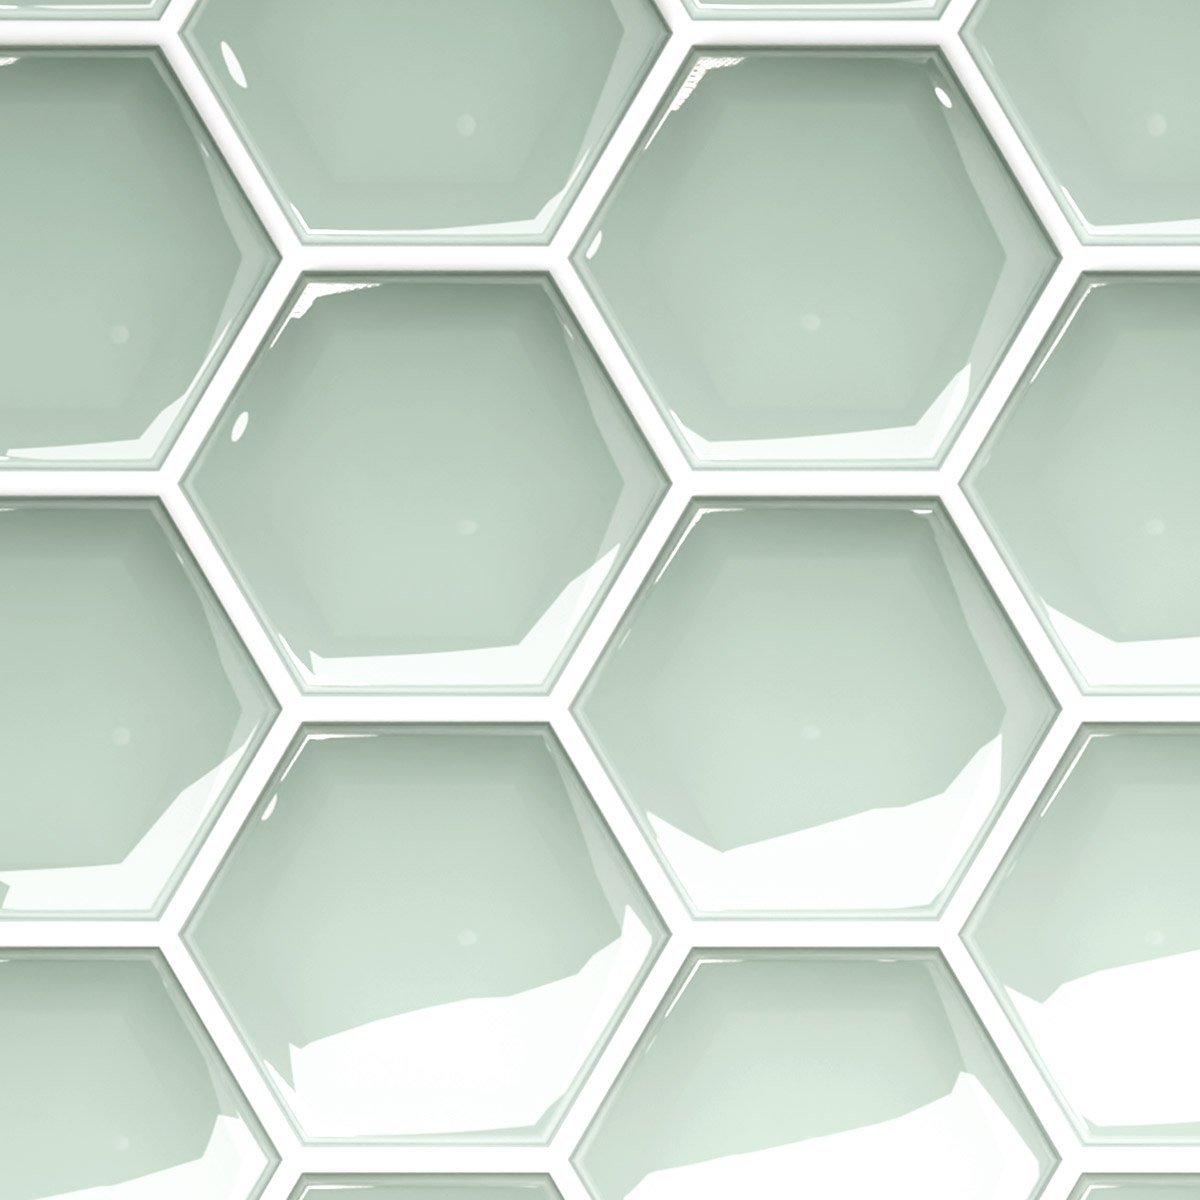 Pastilha Adesiva Hexagonal Verde Frosty com Rejunte Branco Lavável Banheiro Cozinha Sala - 2